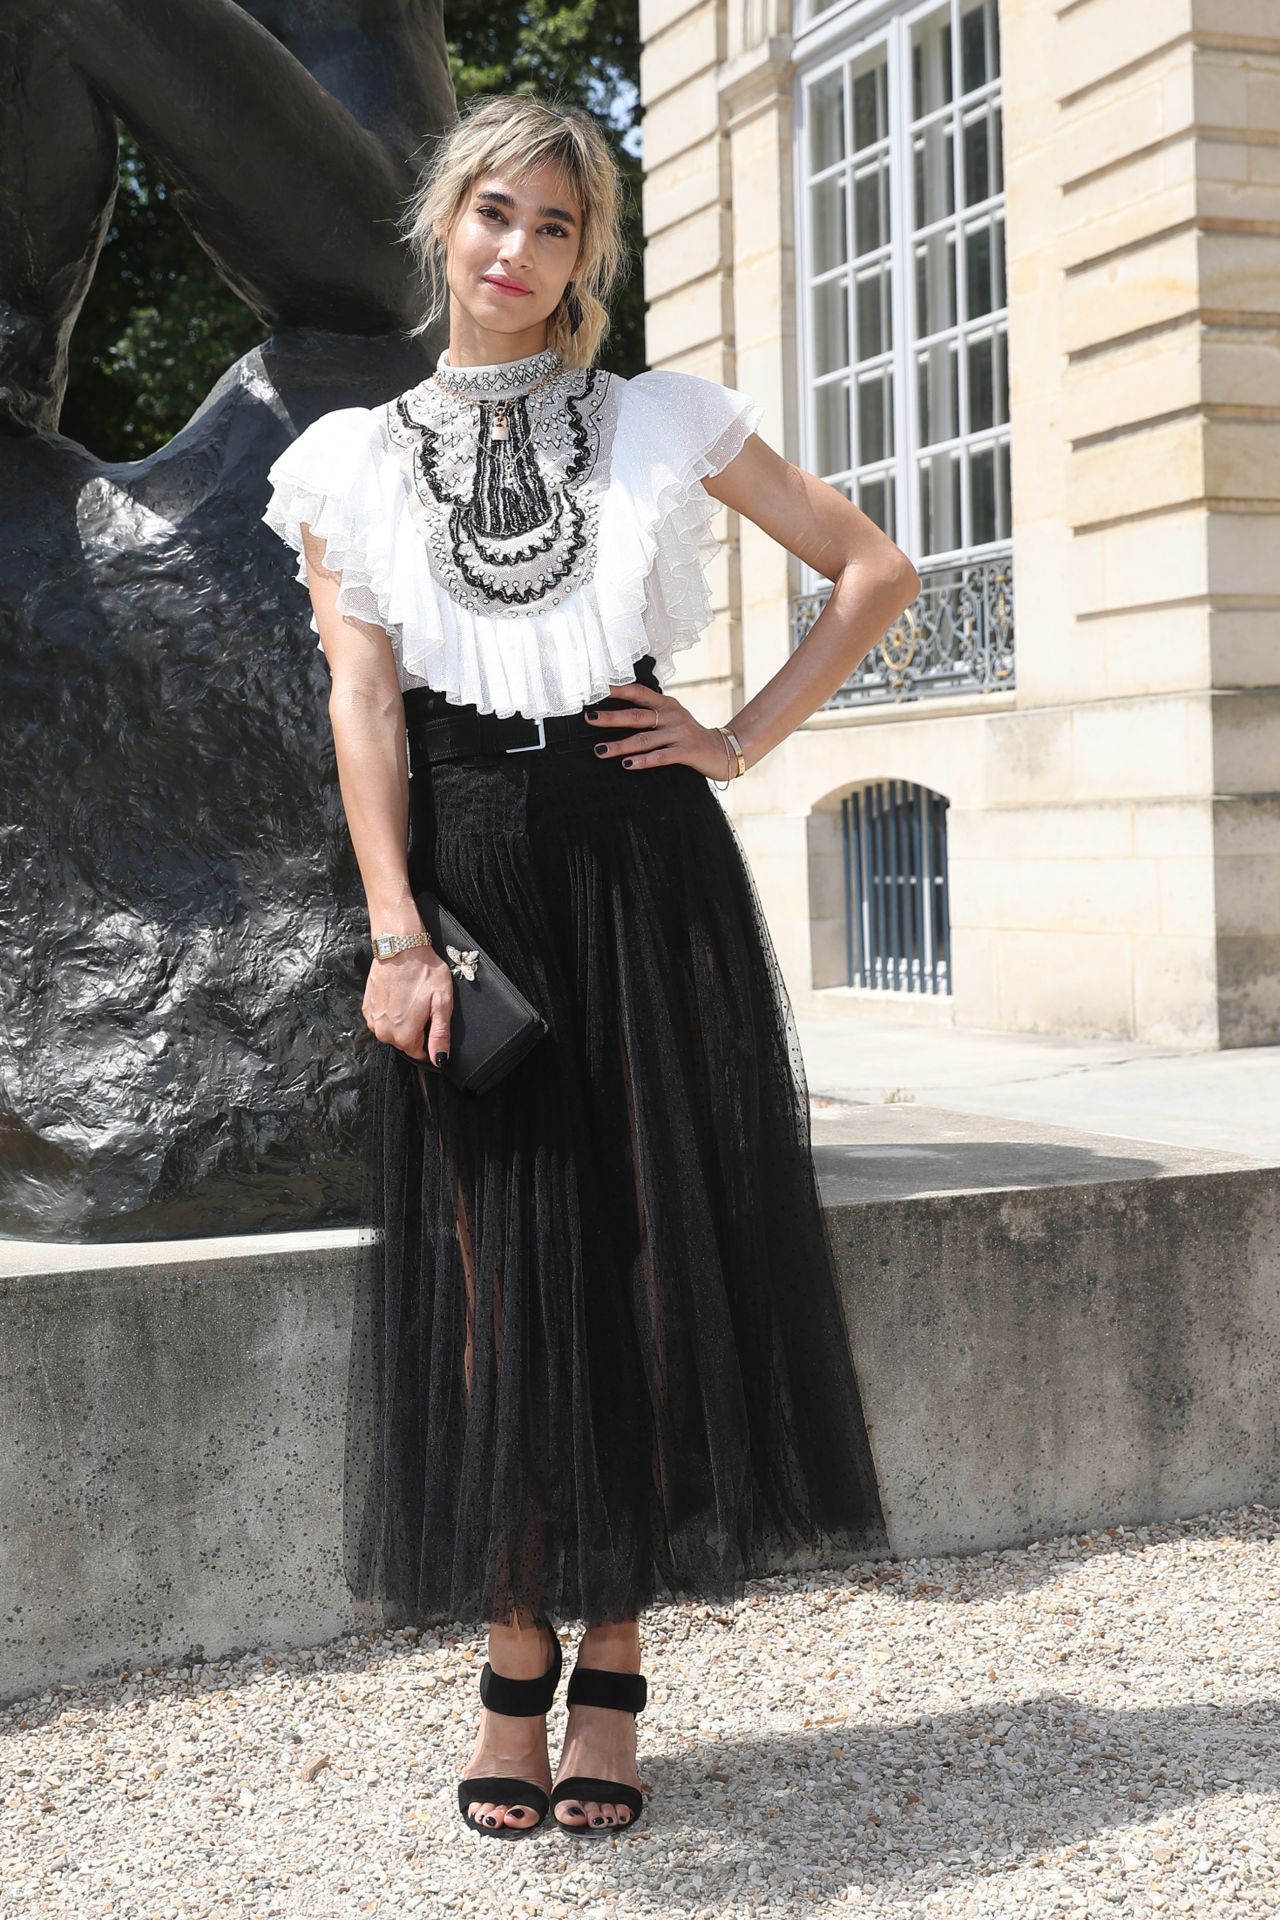 sofia-boutella-christian-dior-show-at-haute-couture-fashion-week-in-paris-07-02-2018-7.jpg